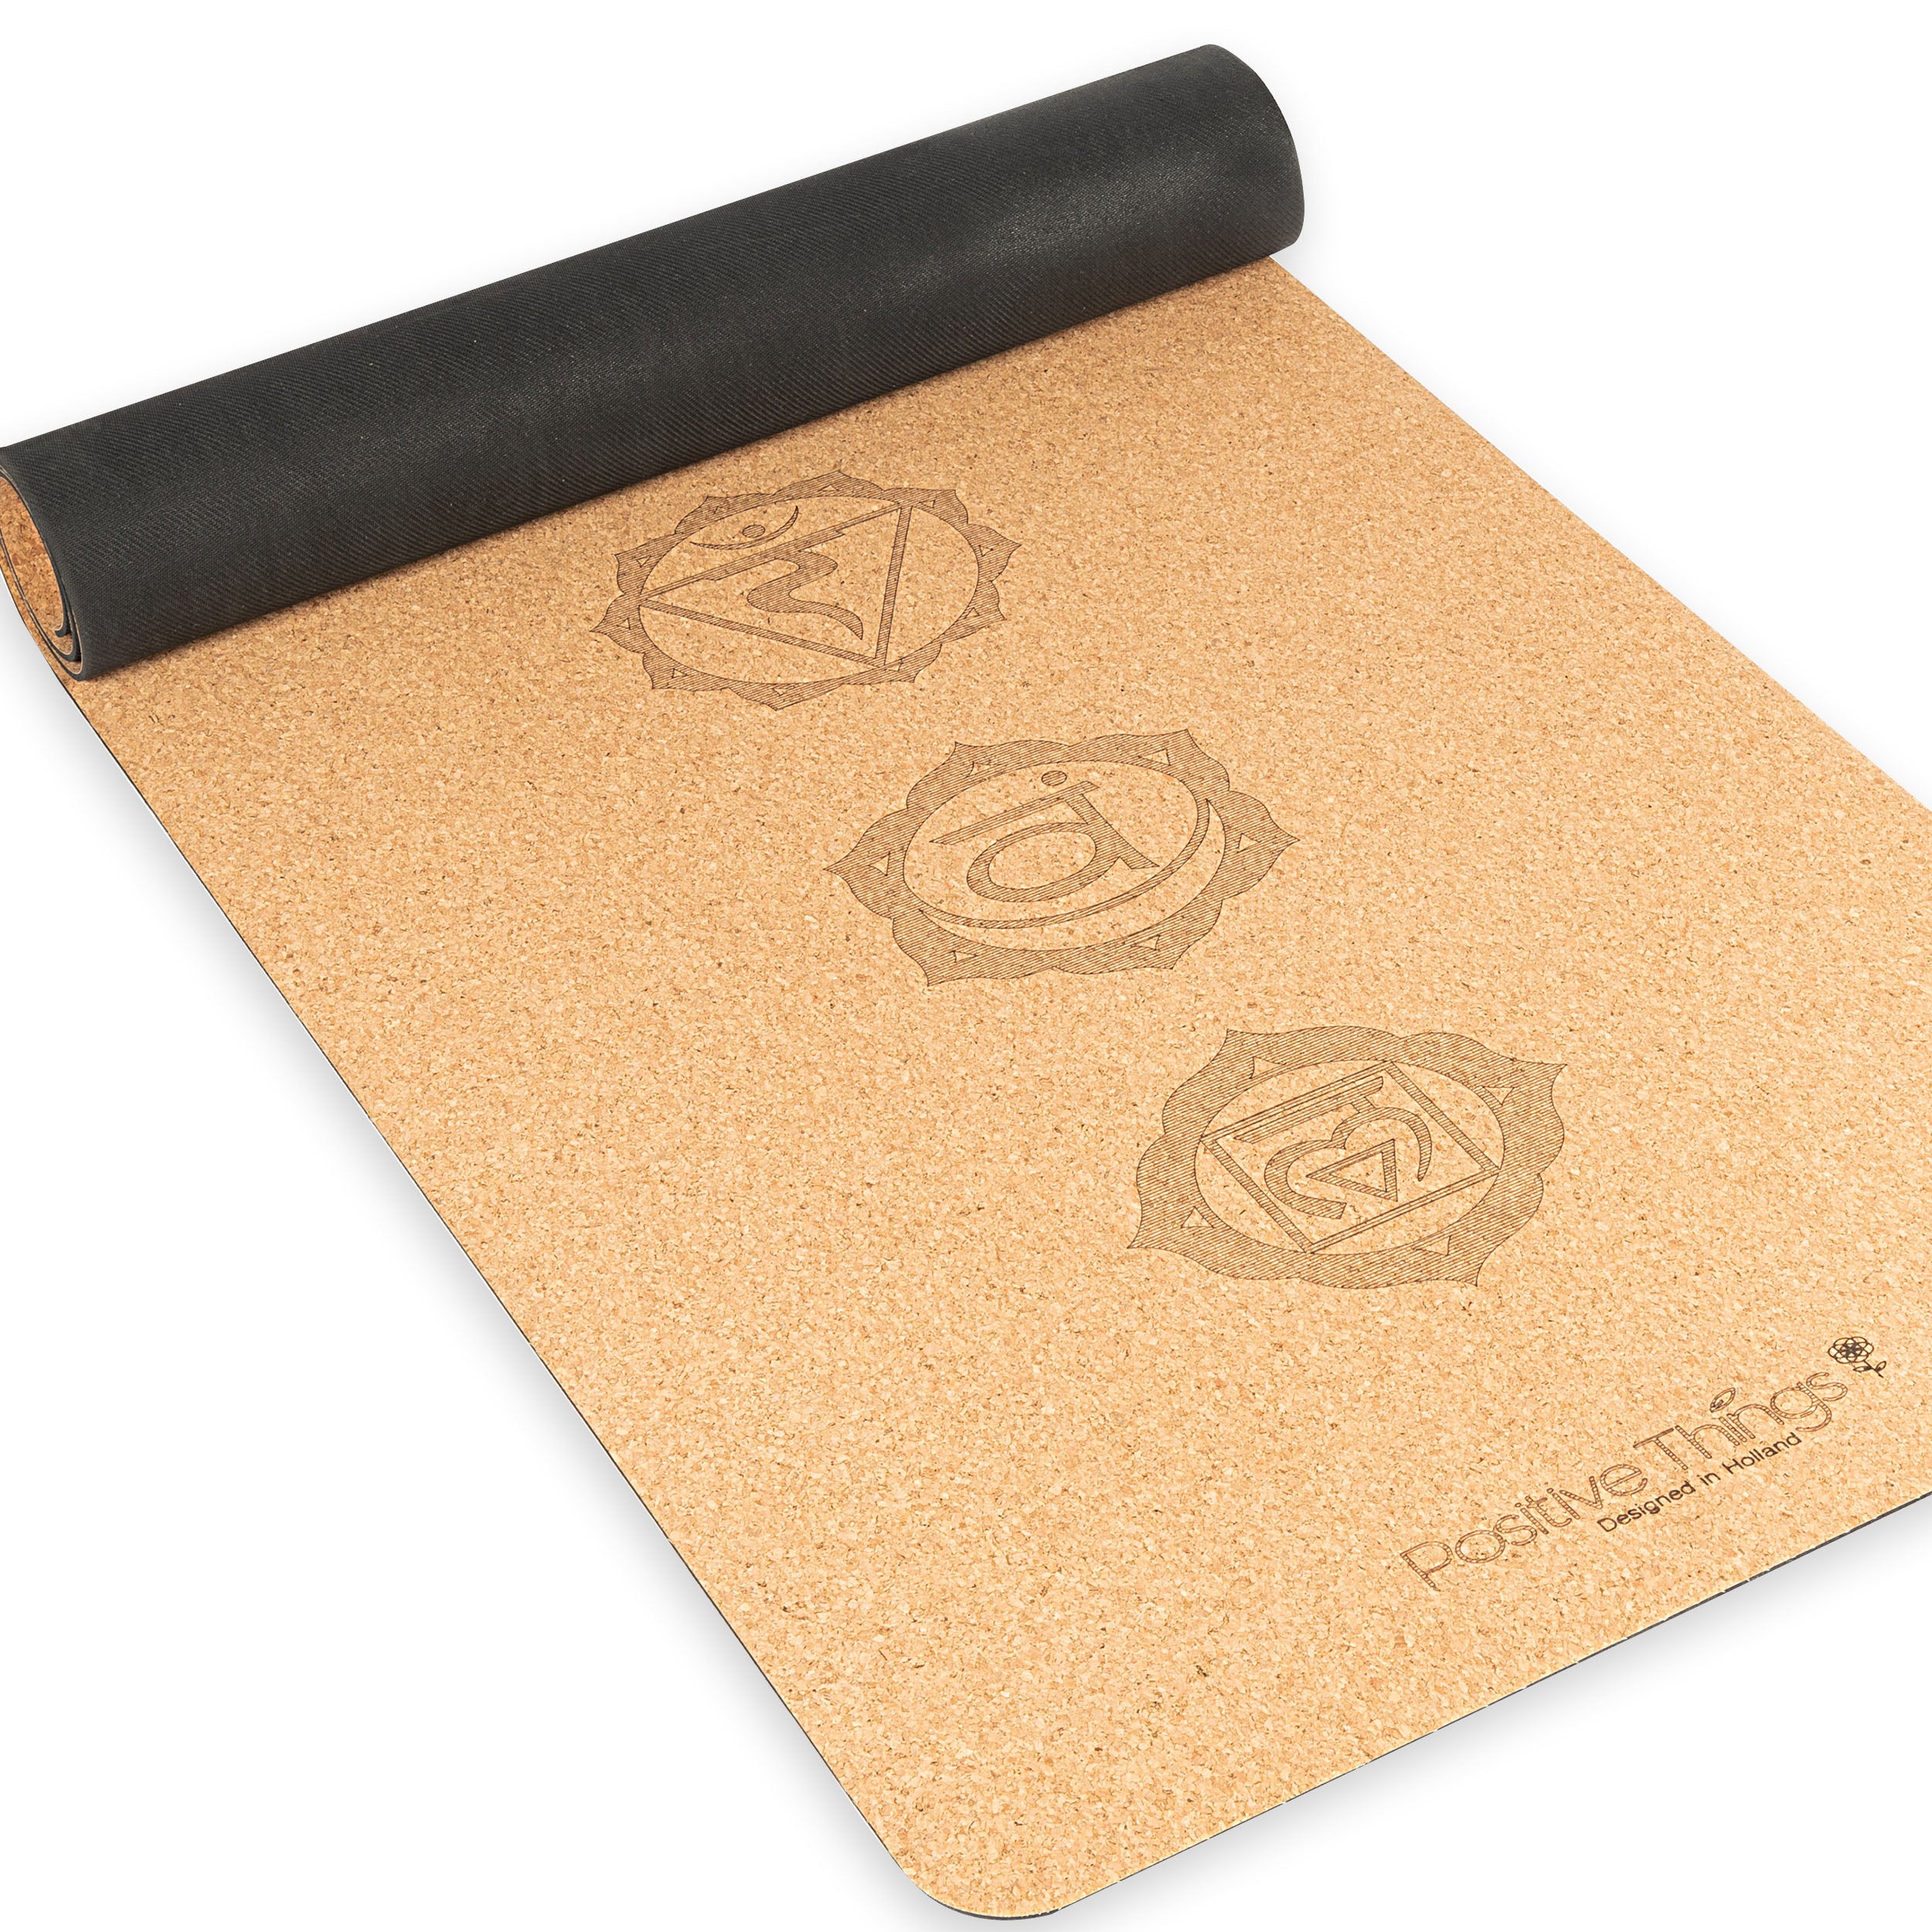 dwaas Rafflesia Arnoldi lezing Positive Things Yoga mat Kurk & Natuurlijk rubber met Antislip